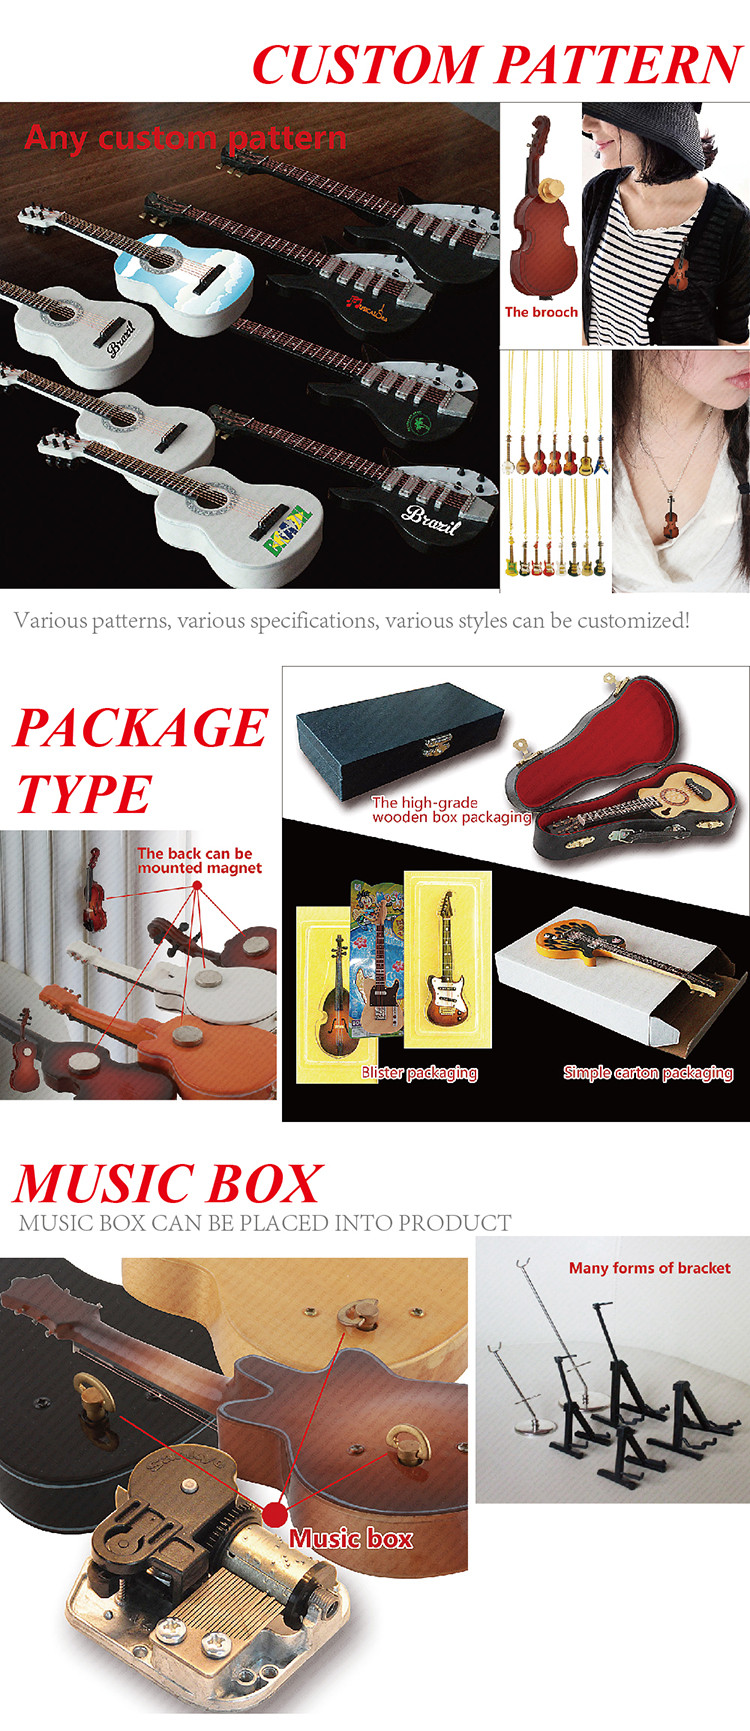 miniature guitar-Customization & pack